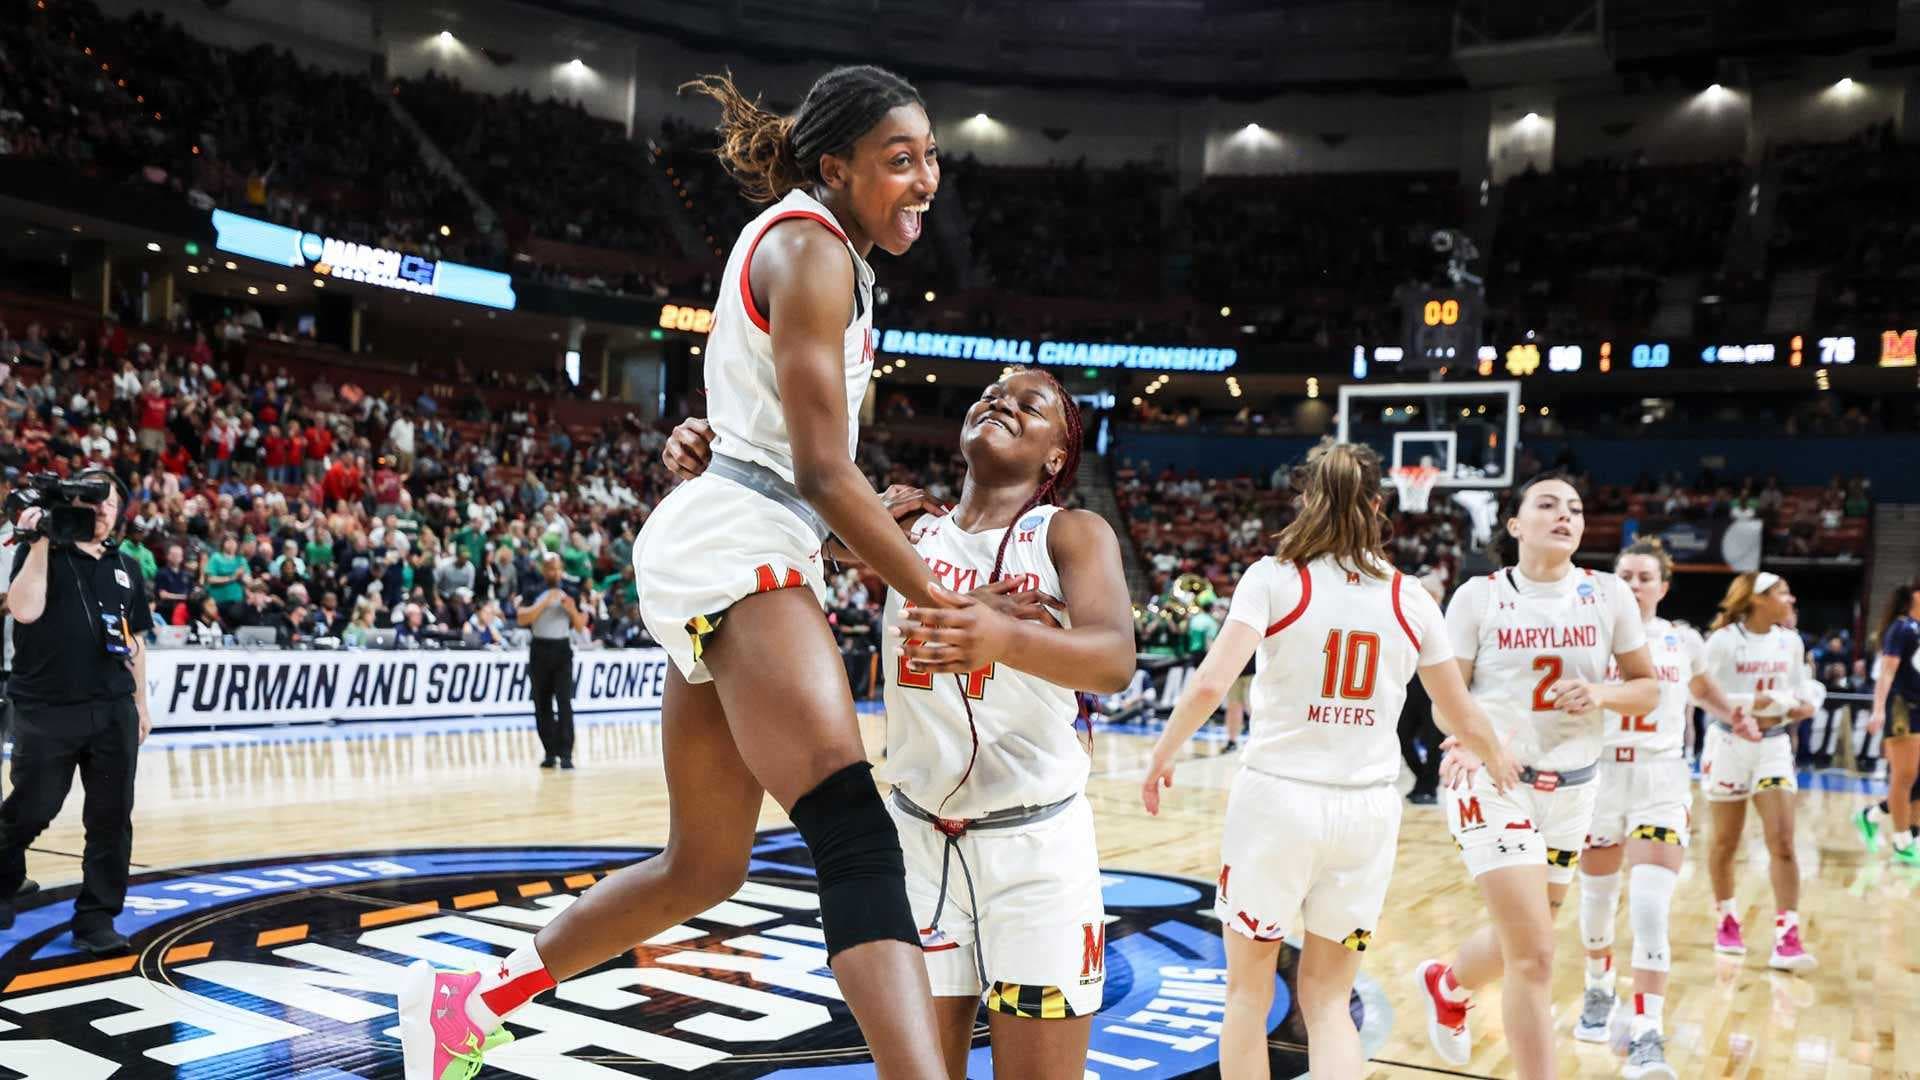 Maryland women's basketball team celebrates on the court